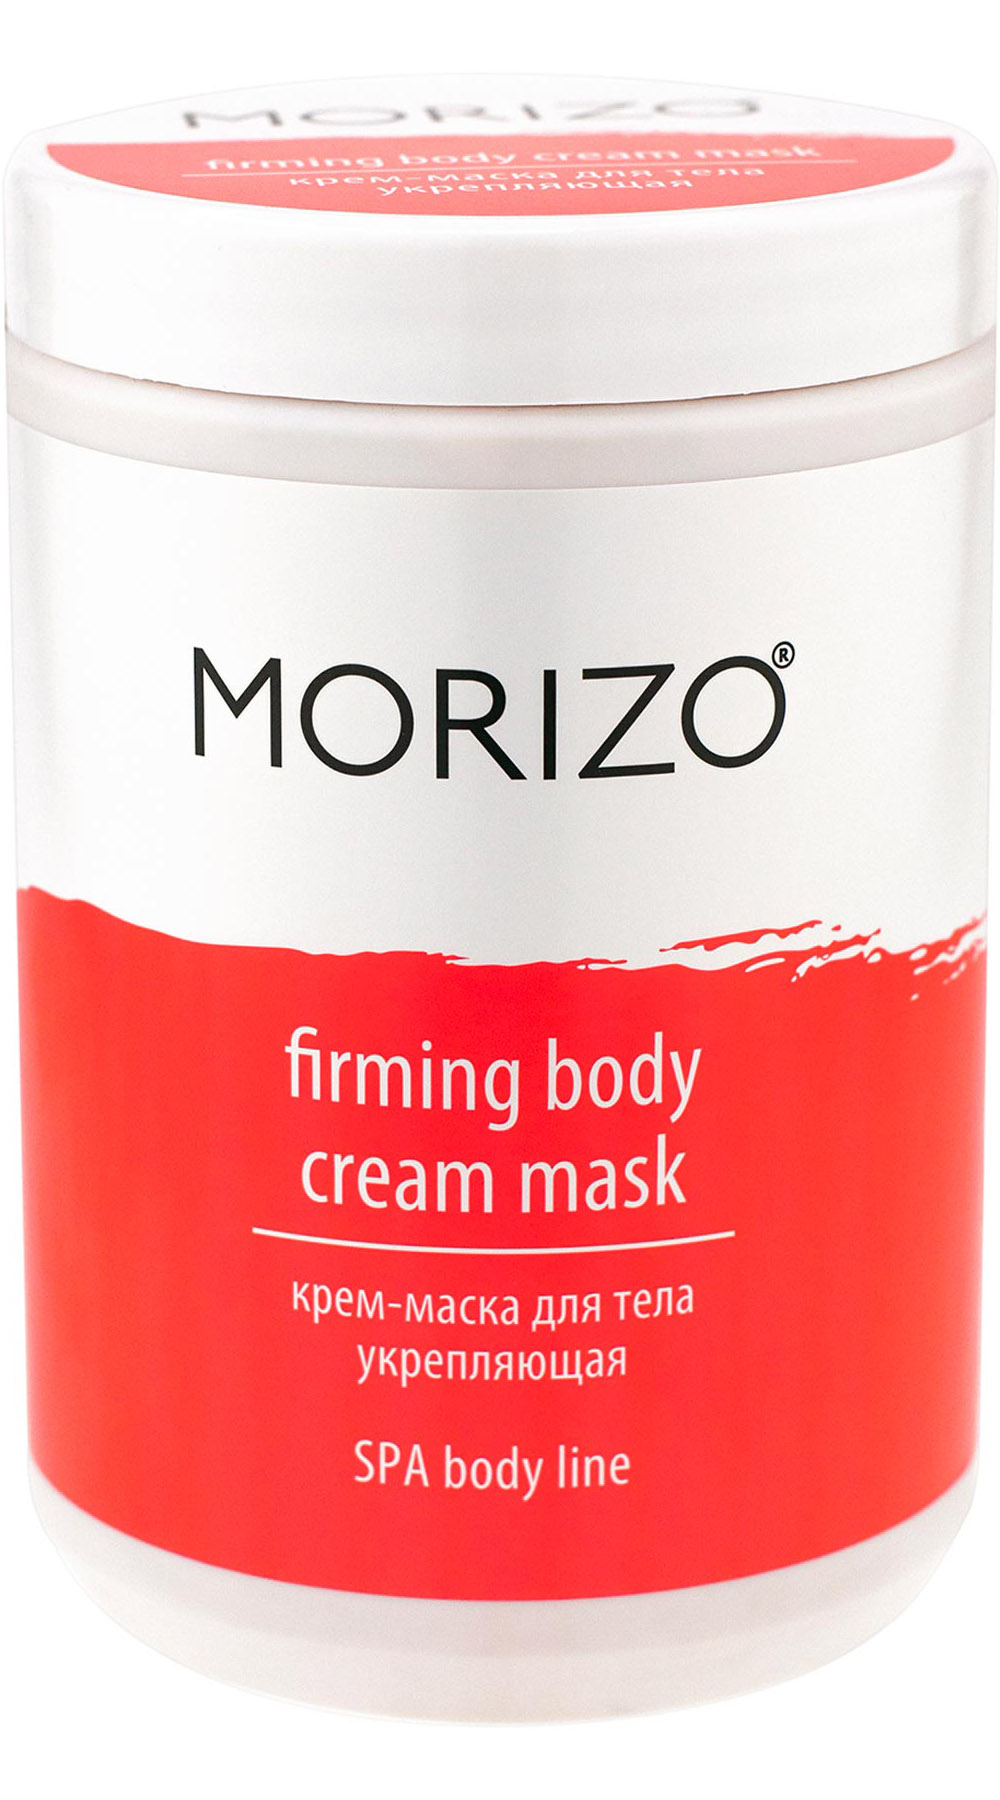 Morizo Крем-маска для тела укрепляющая, 1000 мл (Morizo, Уход за телом)